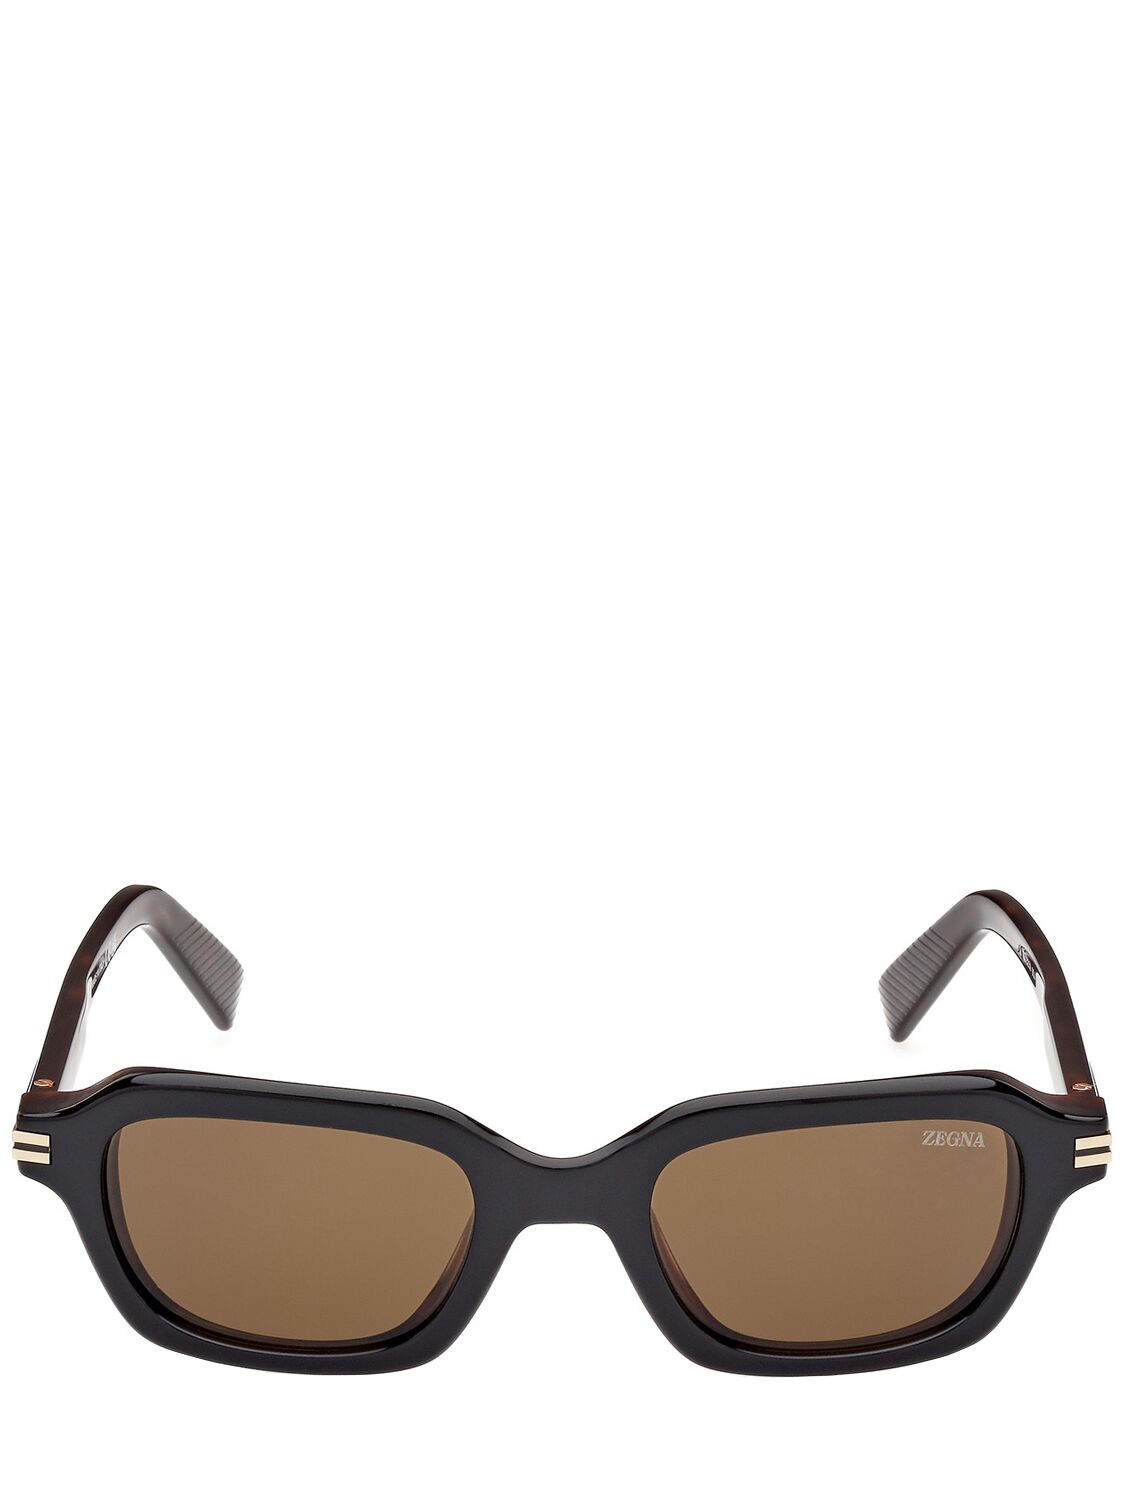 Zegna Squared Sunglasses In Black,brown